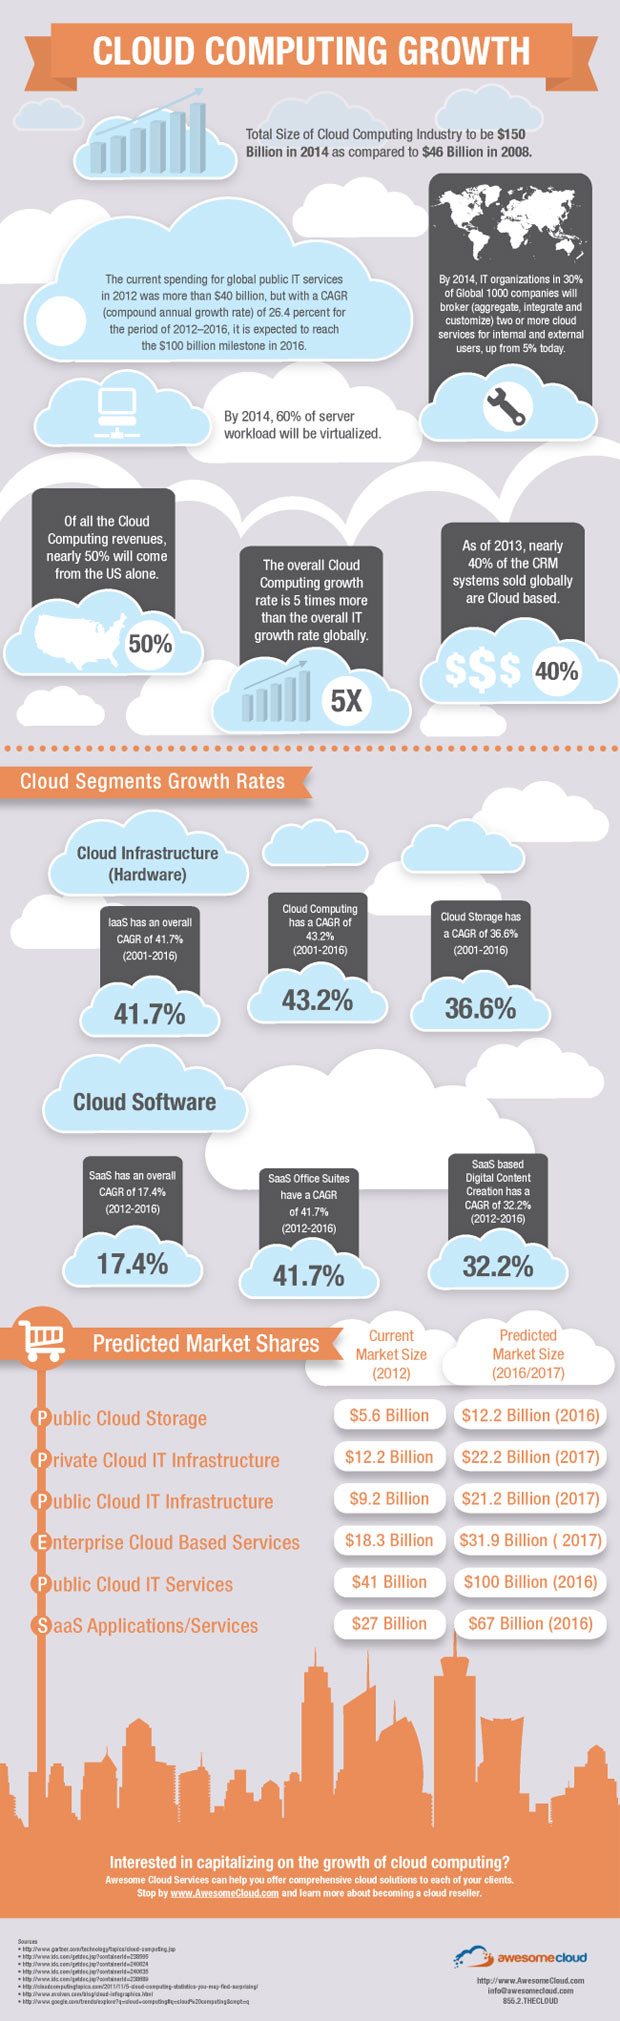 cloud-computing-growth-infographic